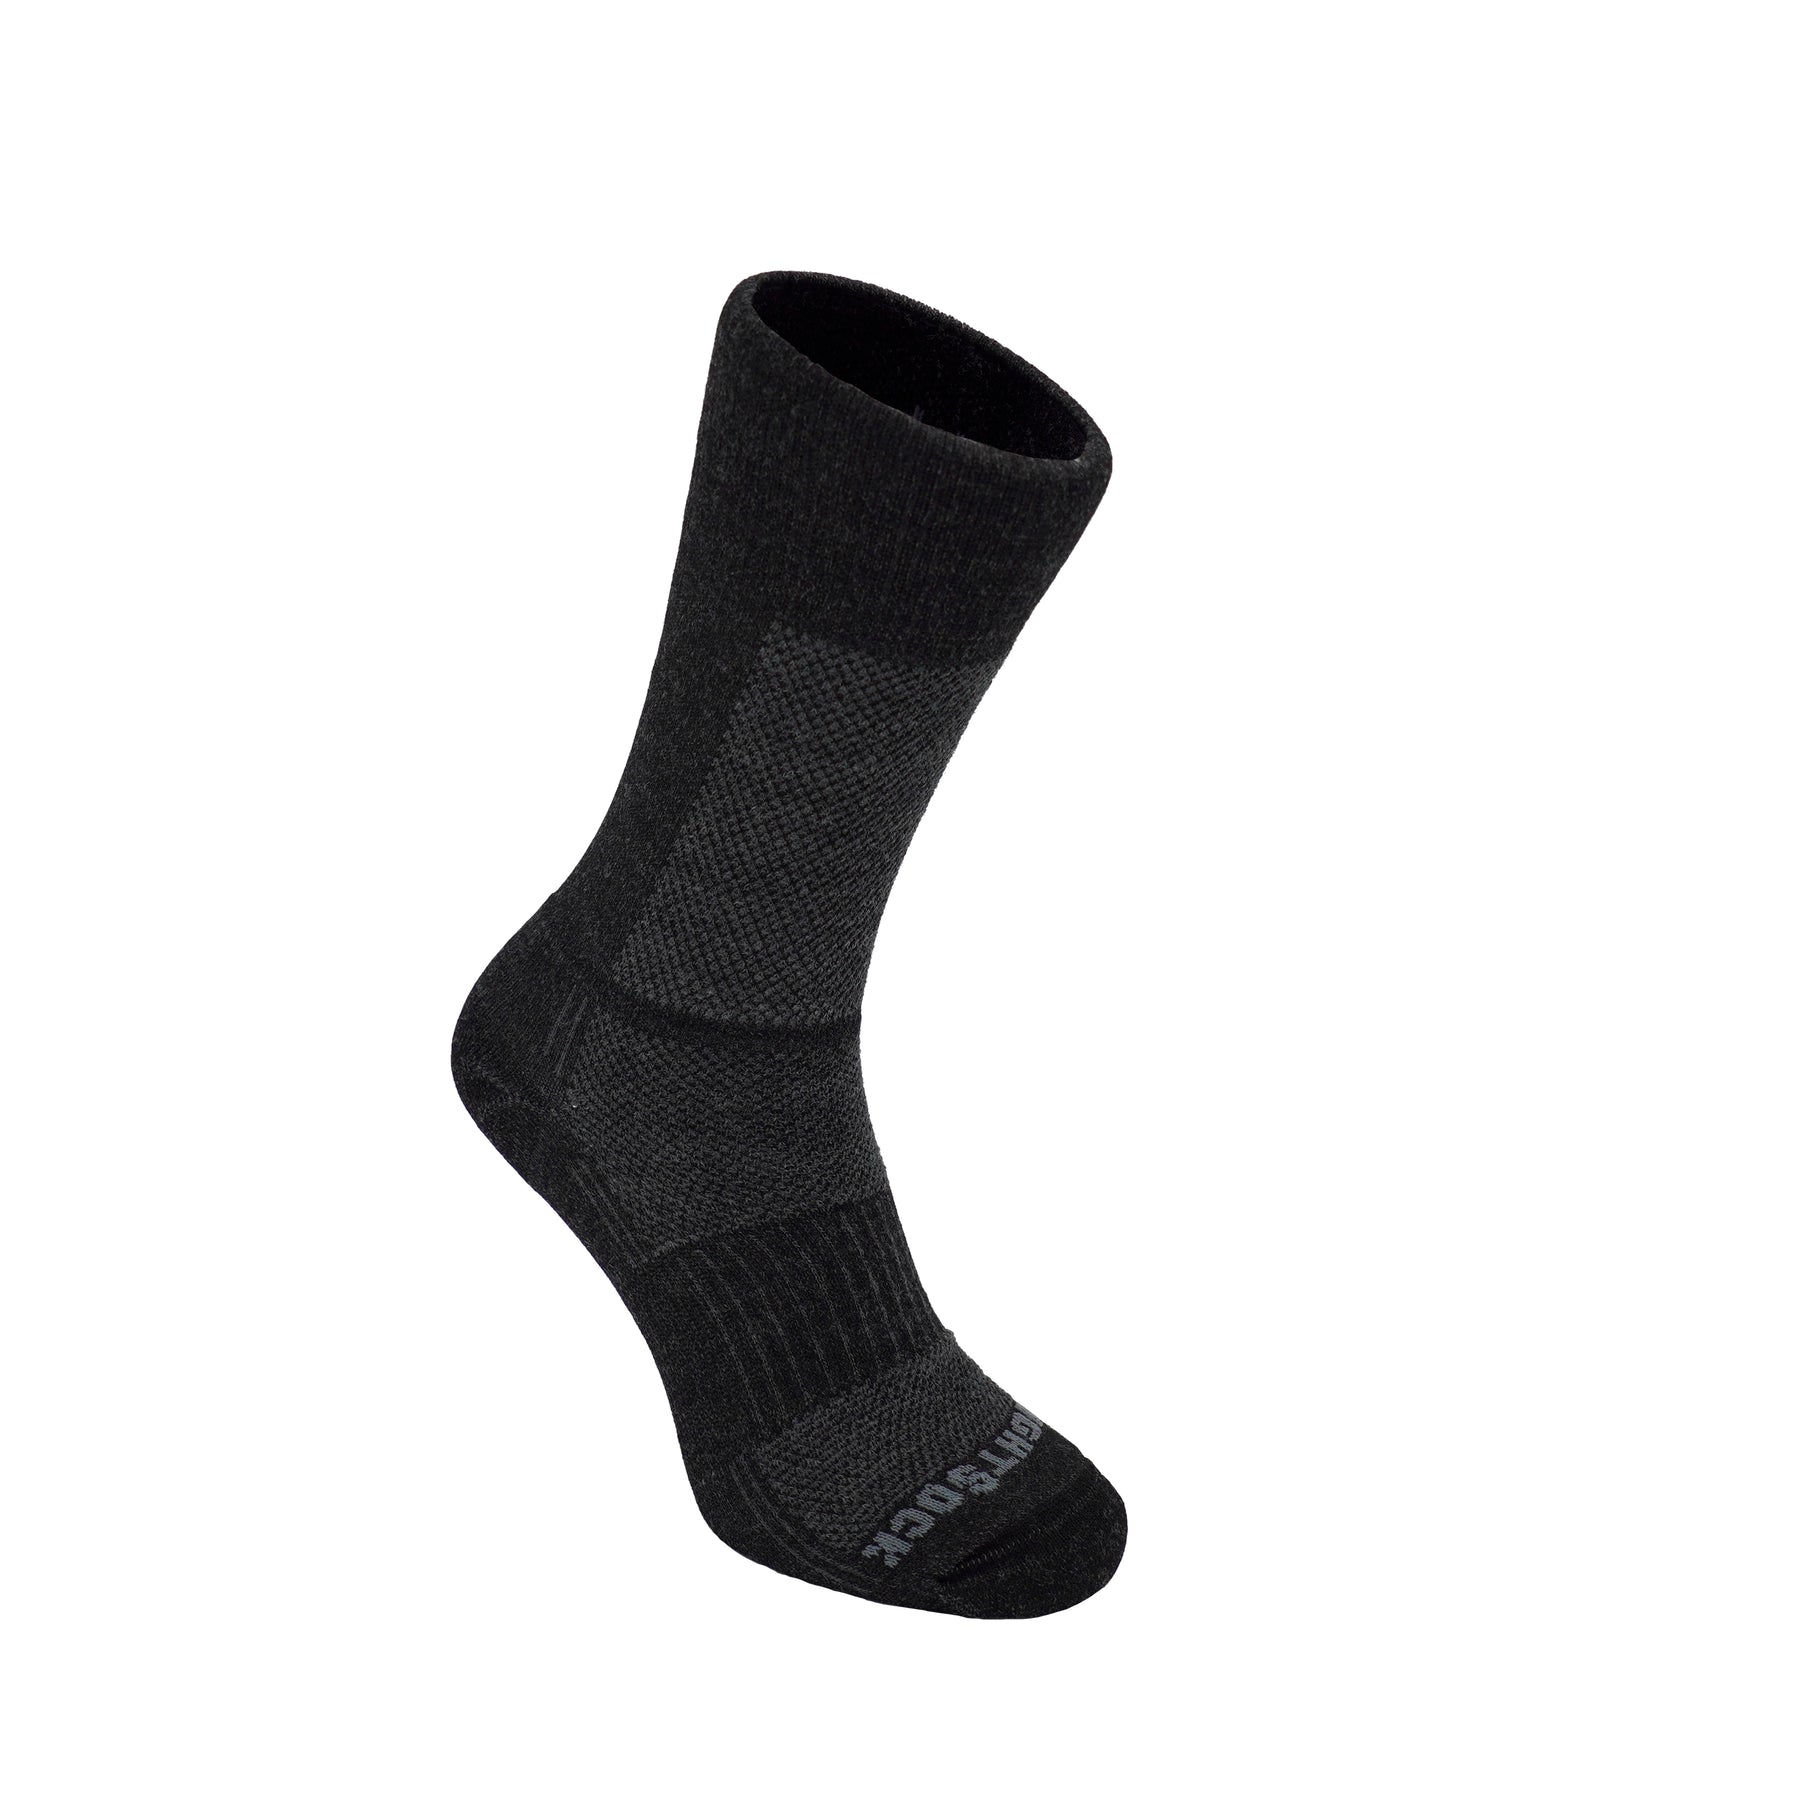 Coolmesh II Merino Wool Crew Socks | Wrightsock Anti-Blister Socks